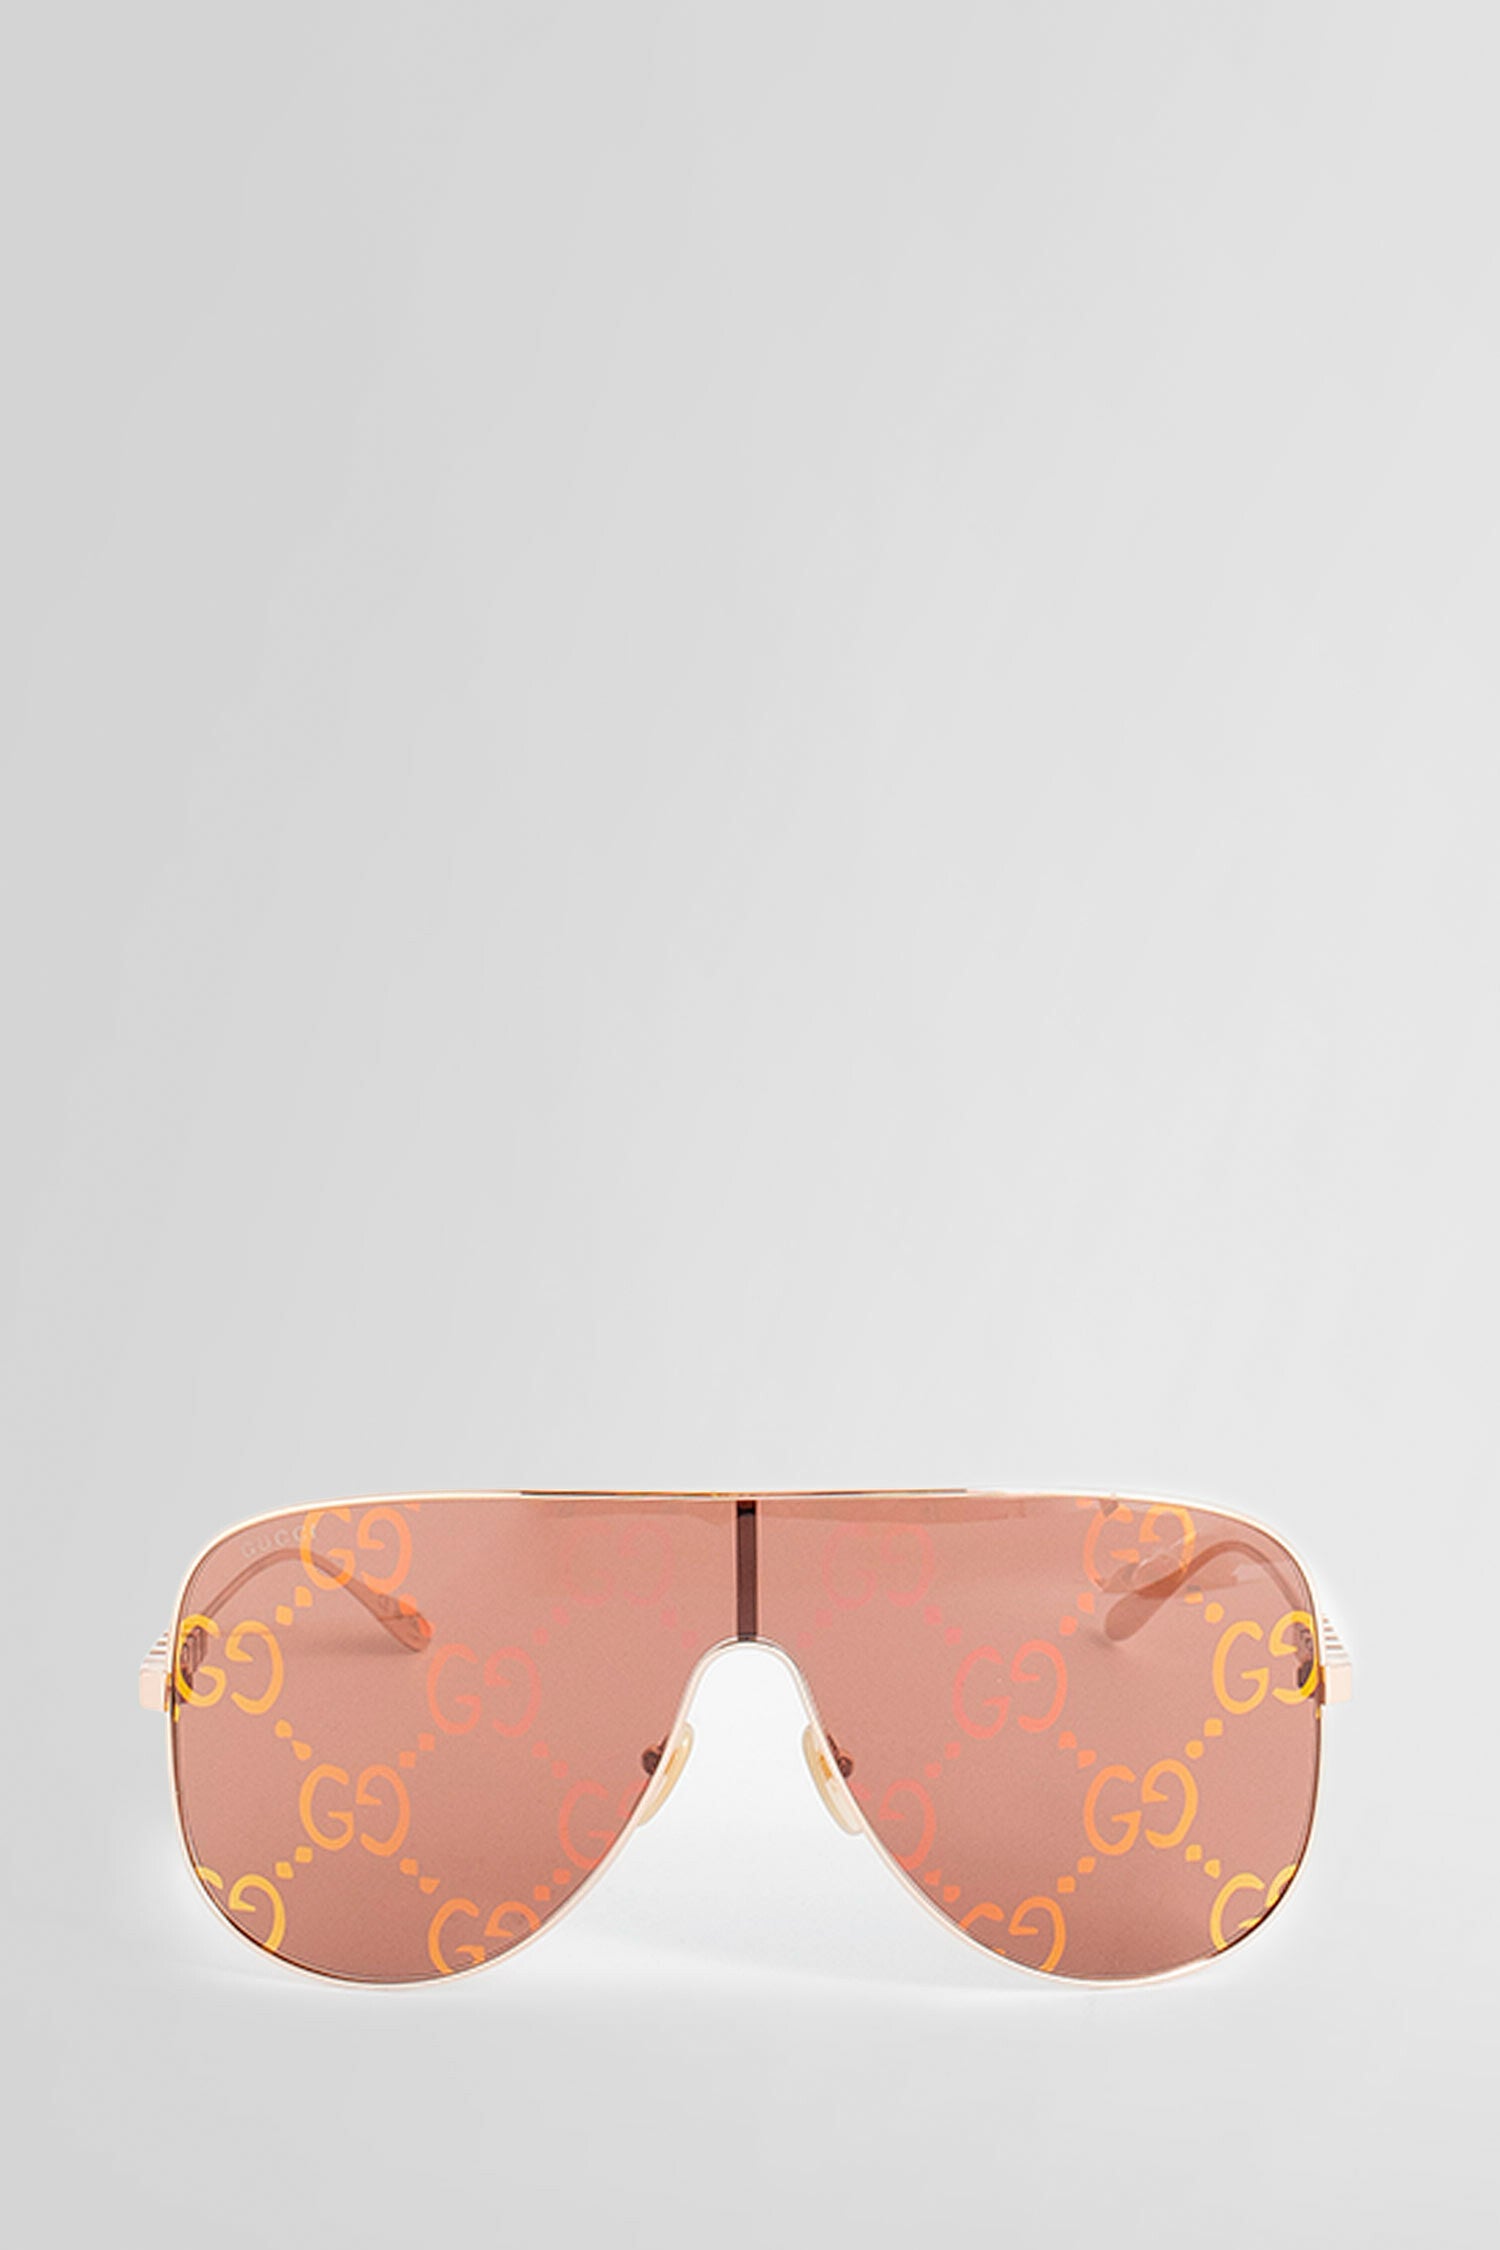 Gucci Black Mask GG Sunglasses - ShopStyle